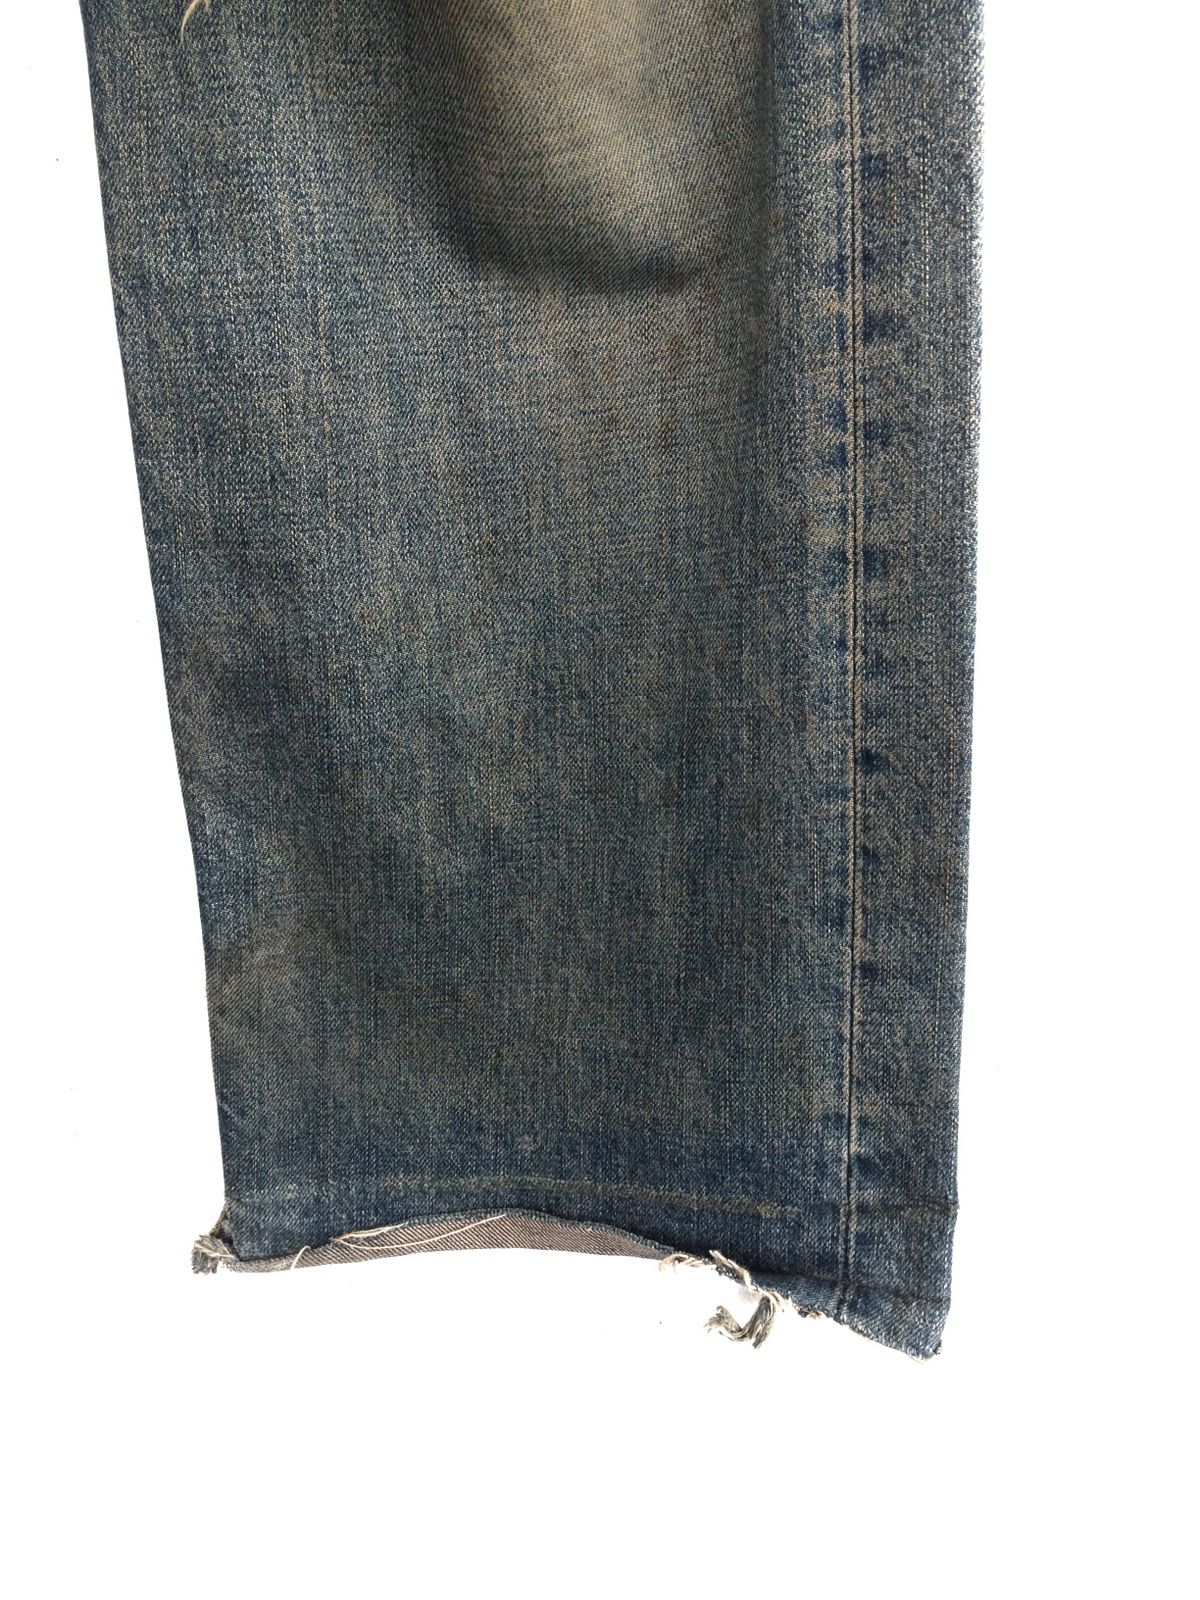 Vintage Levis Distressed Kurt Cobain Fashion Style Denim Pant Size US 31 - 4 Thumbnail